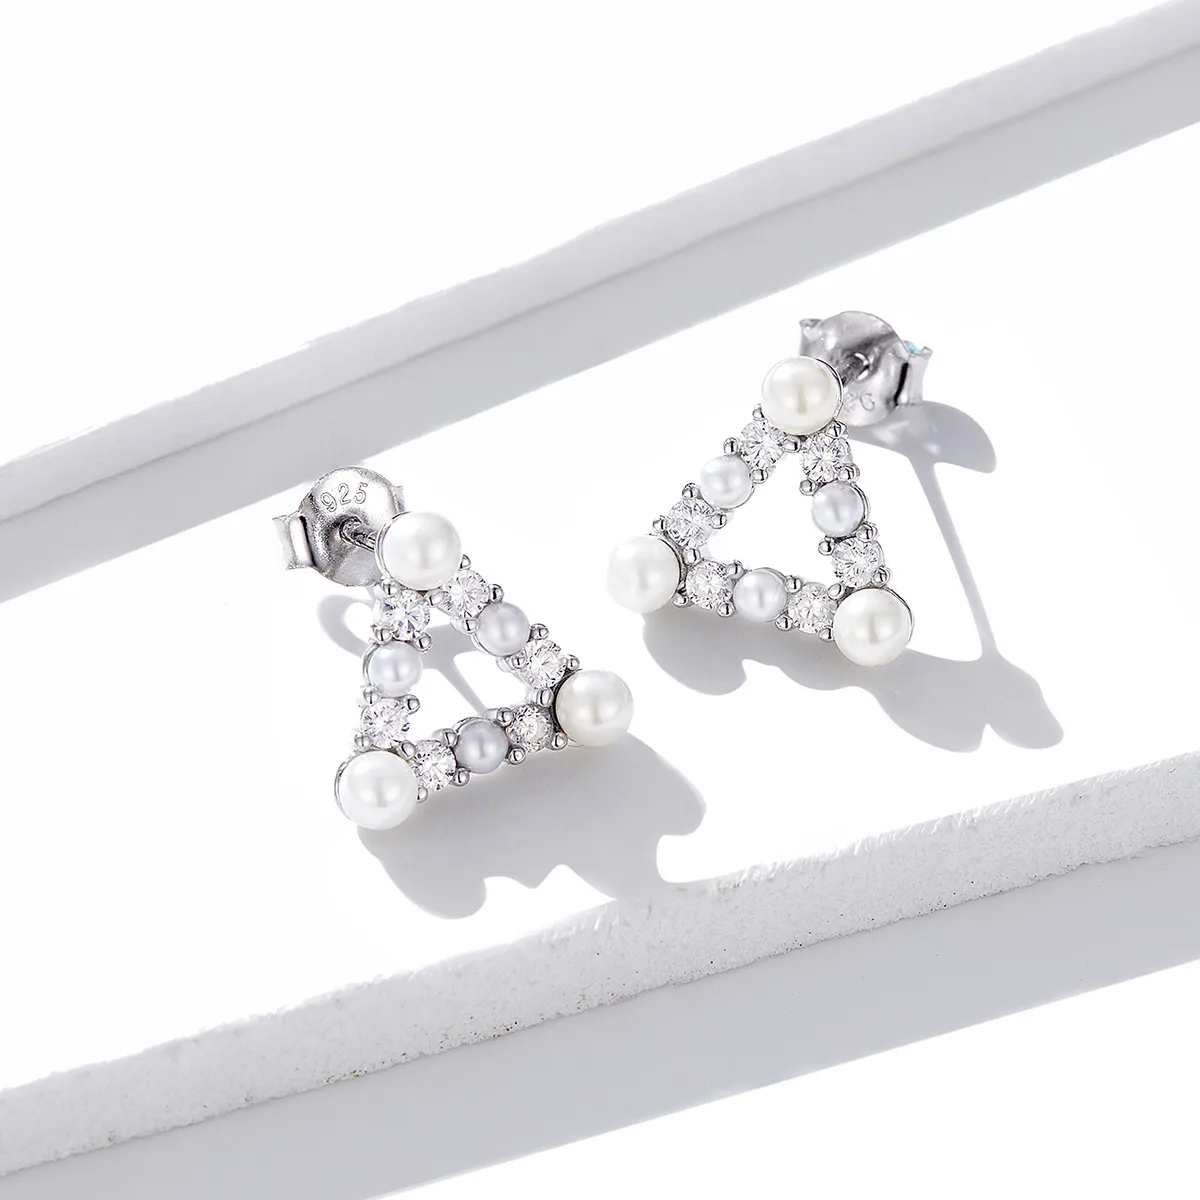 Pandora Style Pearl Triangle Stud Earrings - BSE215